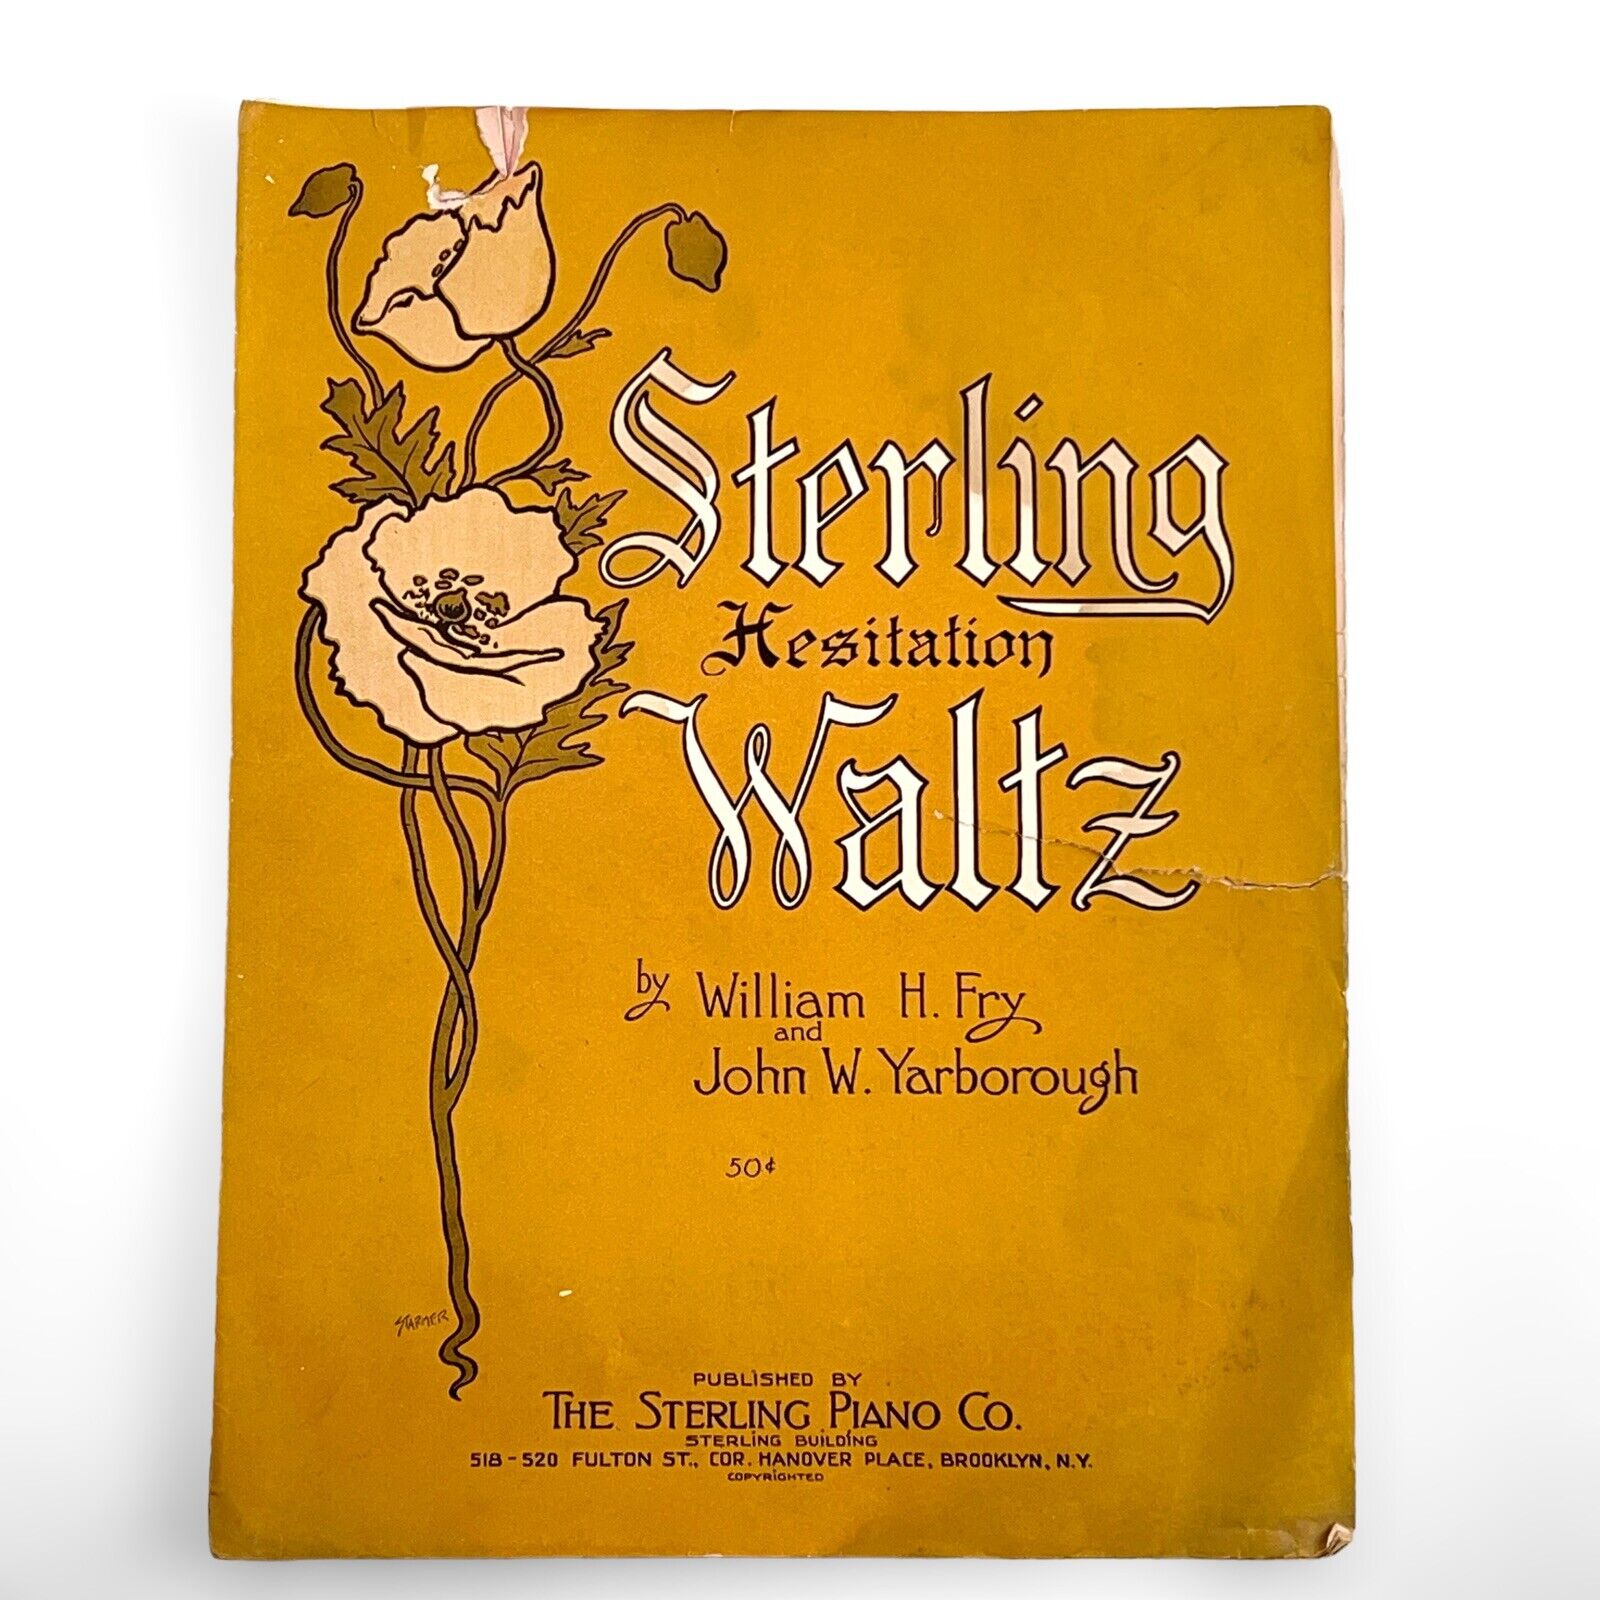 STERLING HESITATION WALTZ sheet music - William H Fry, John W. Yarborough